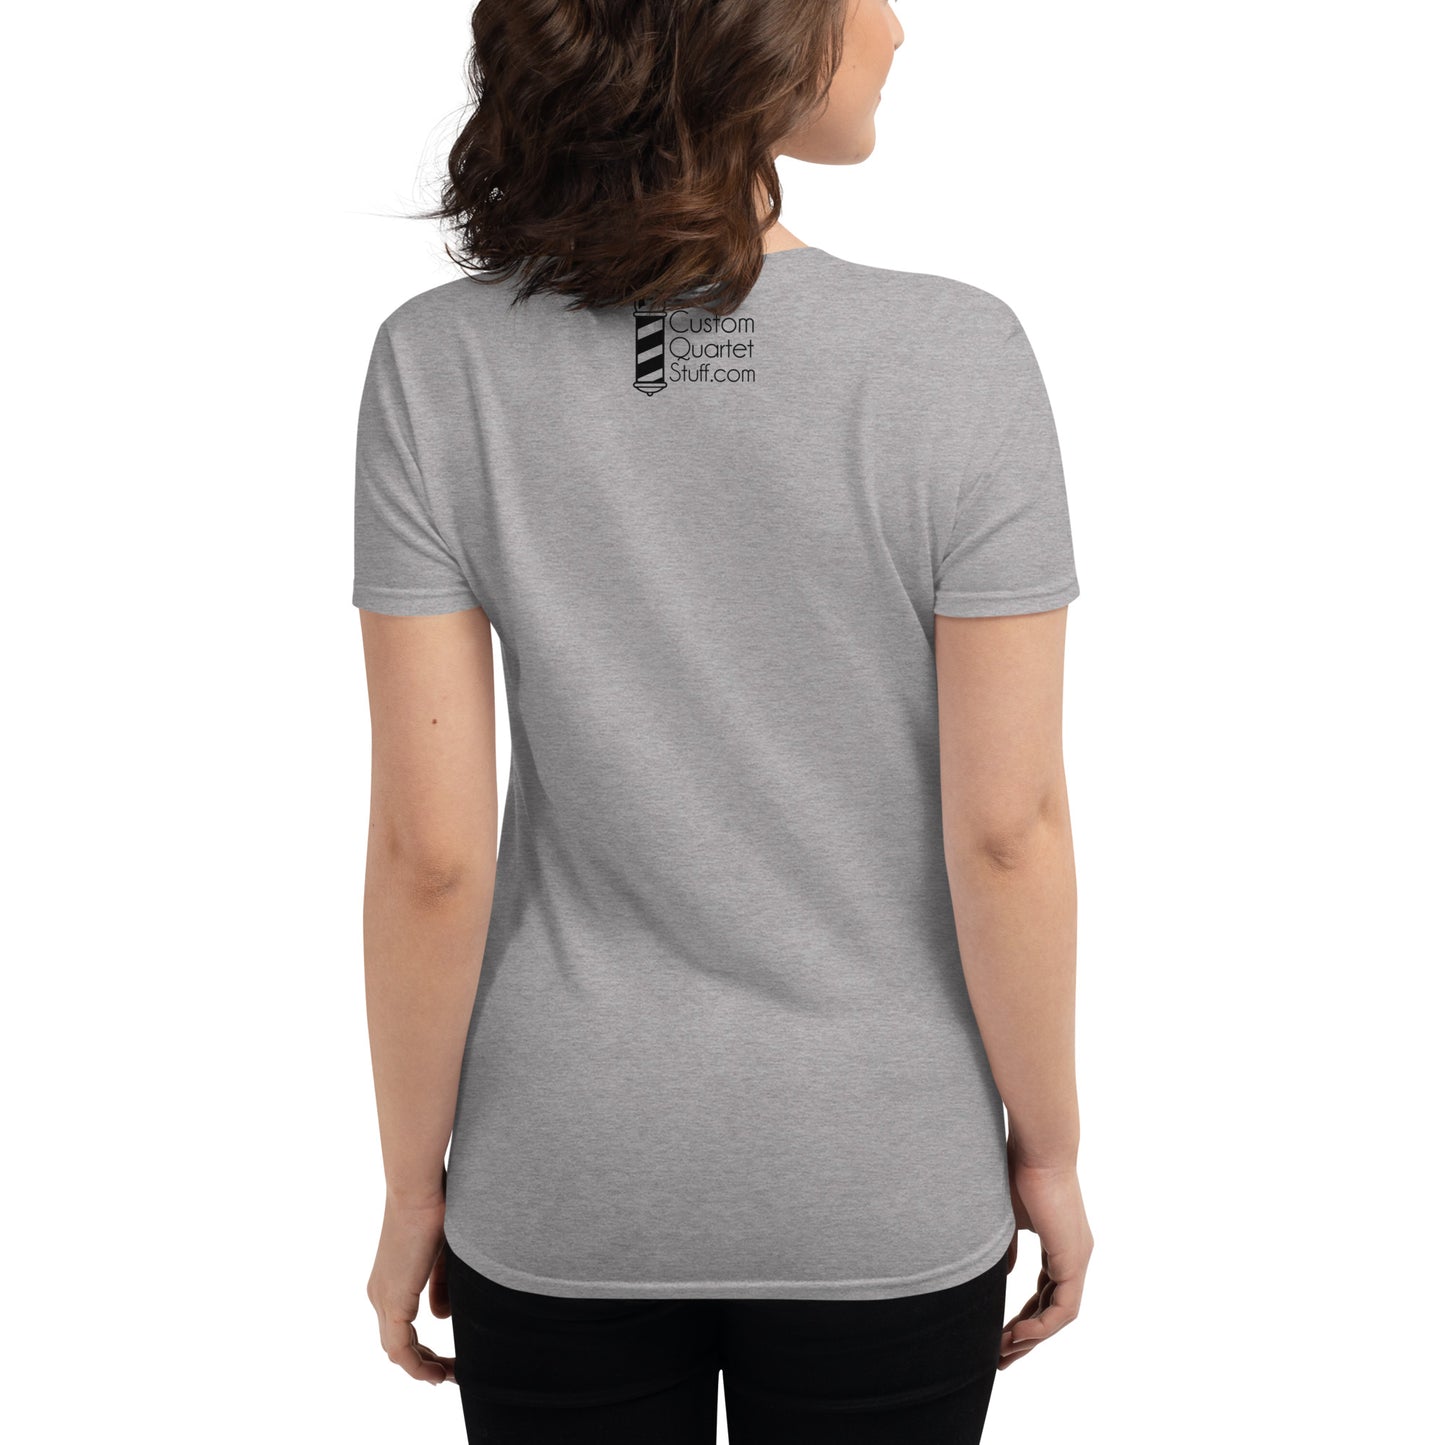 Studio Talk - Fitted Women's short sleeve t-shirt